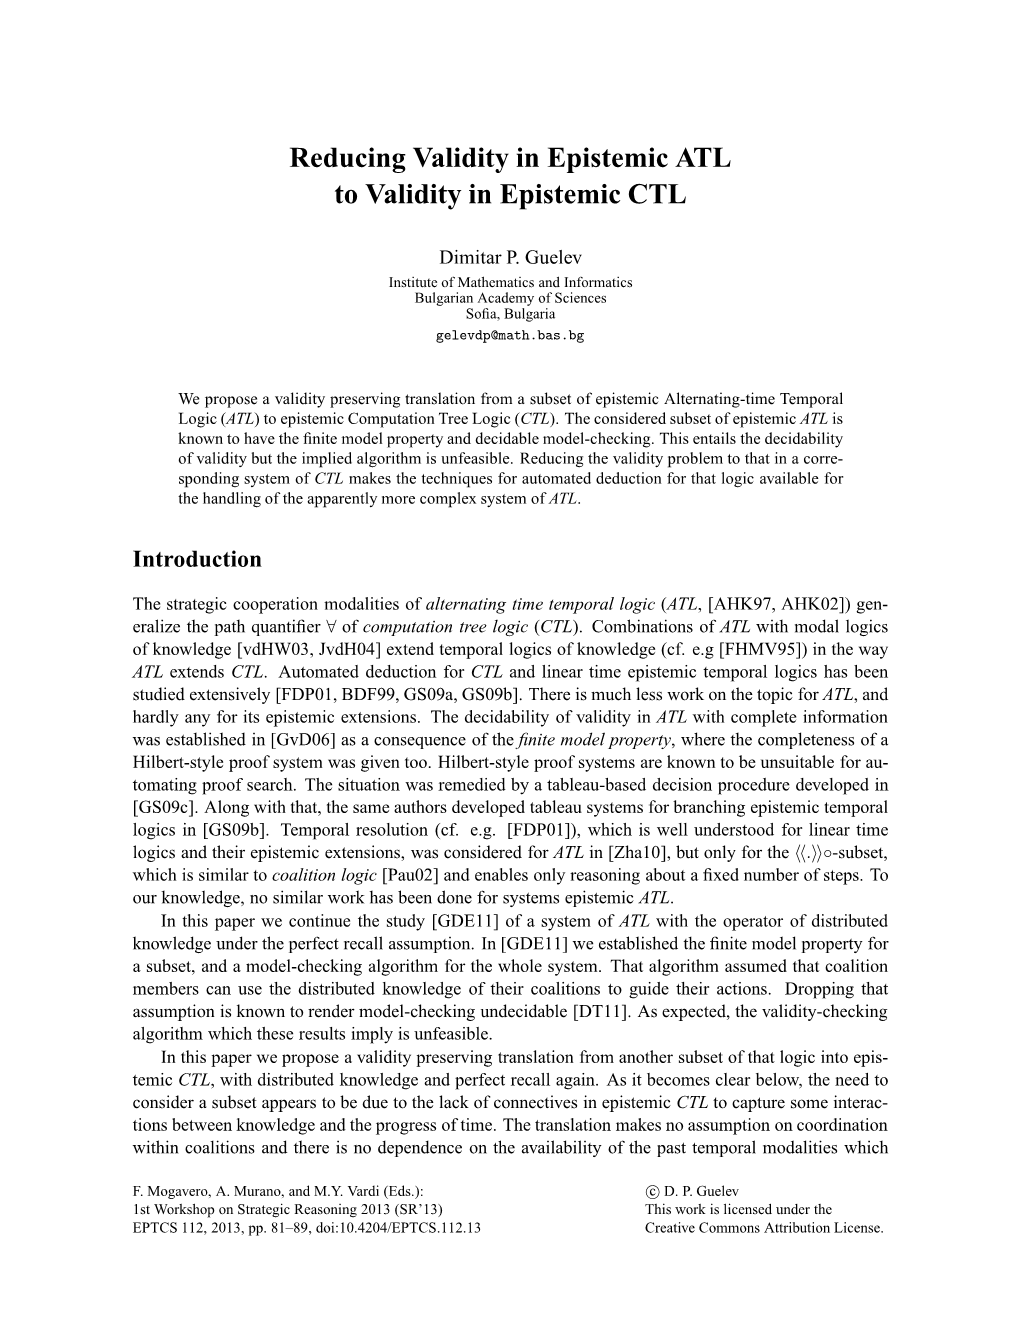 Reducing Validity in Epistemic ATL to Validity in Epistemic CTL